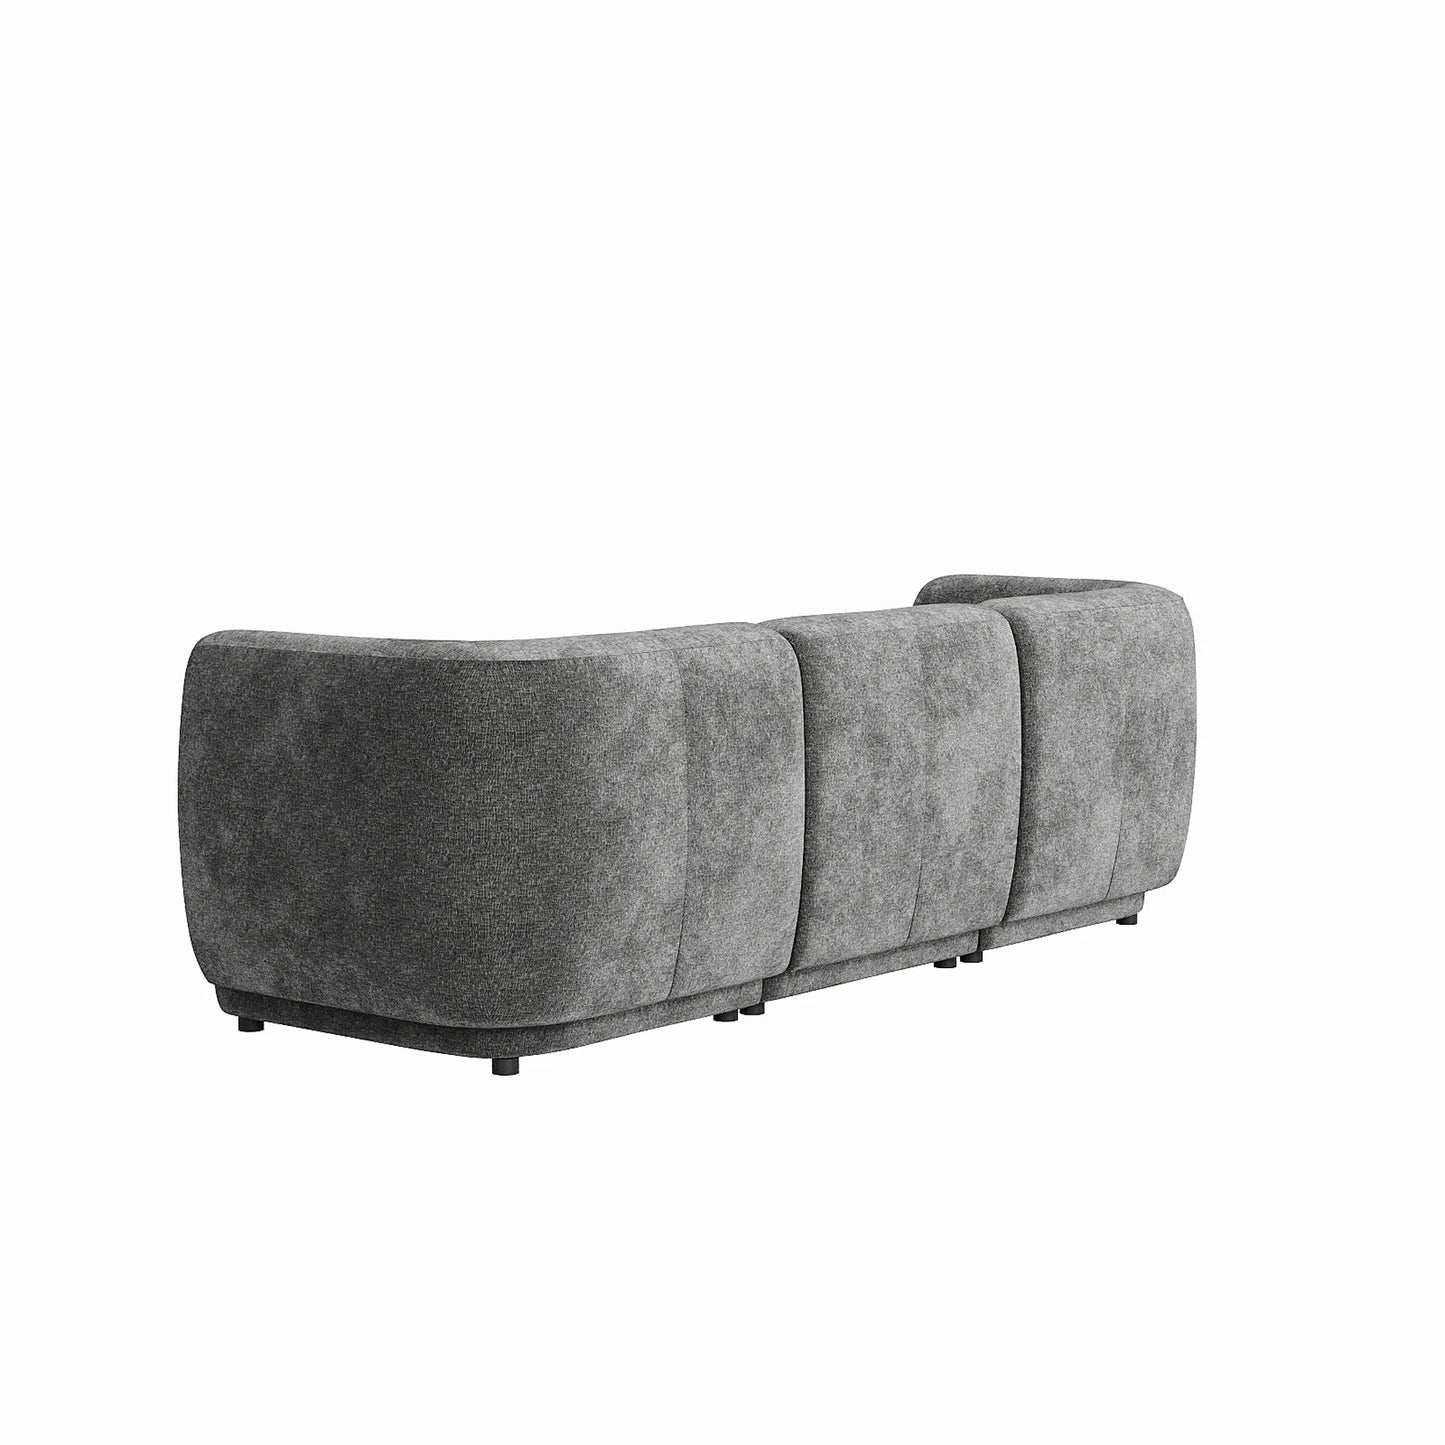 Plum 4 Seater Sofa - City Grey